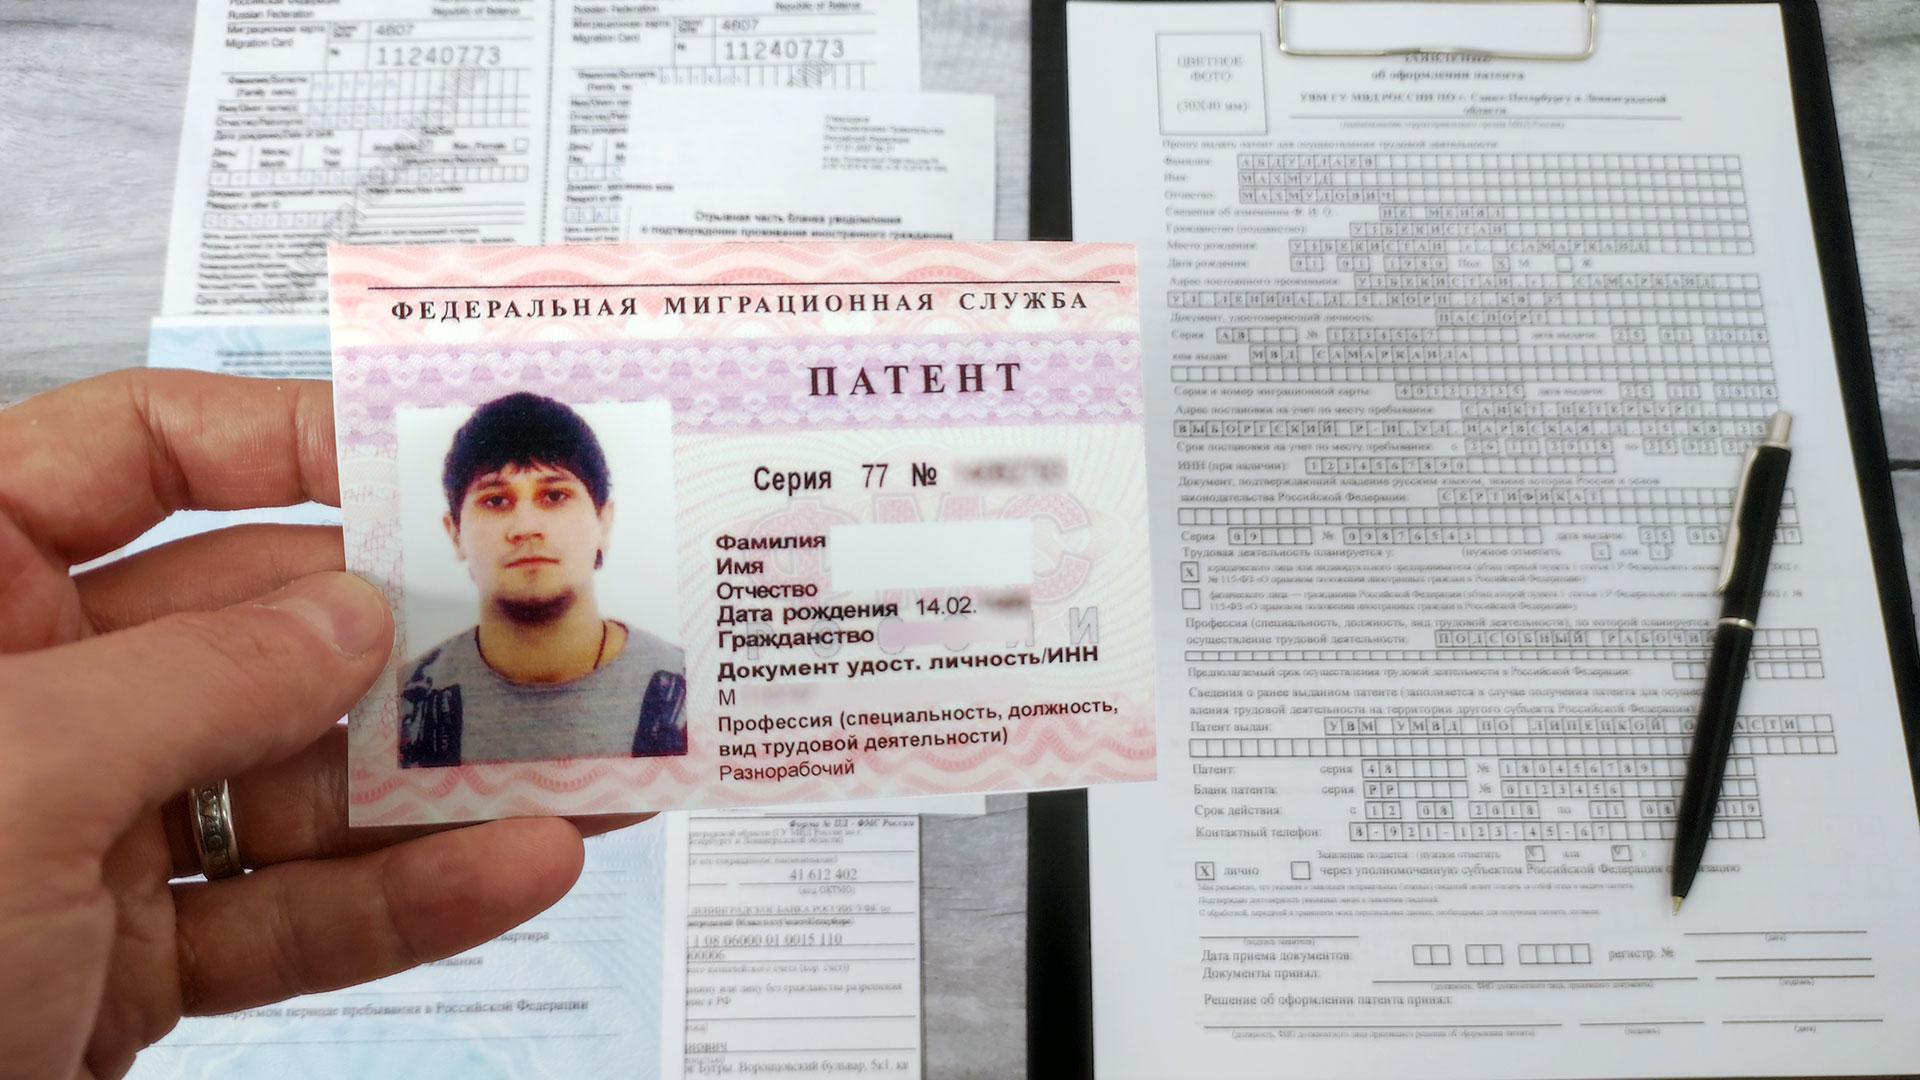 Без патента могут работать граждане. Патент для иностранных граждан. Патент на работу для иностранных граждан. Патент для иностранных граждан фото. Кредит иностранным гражданам в России с патентом.